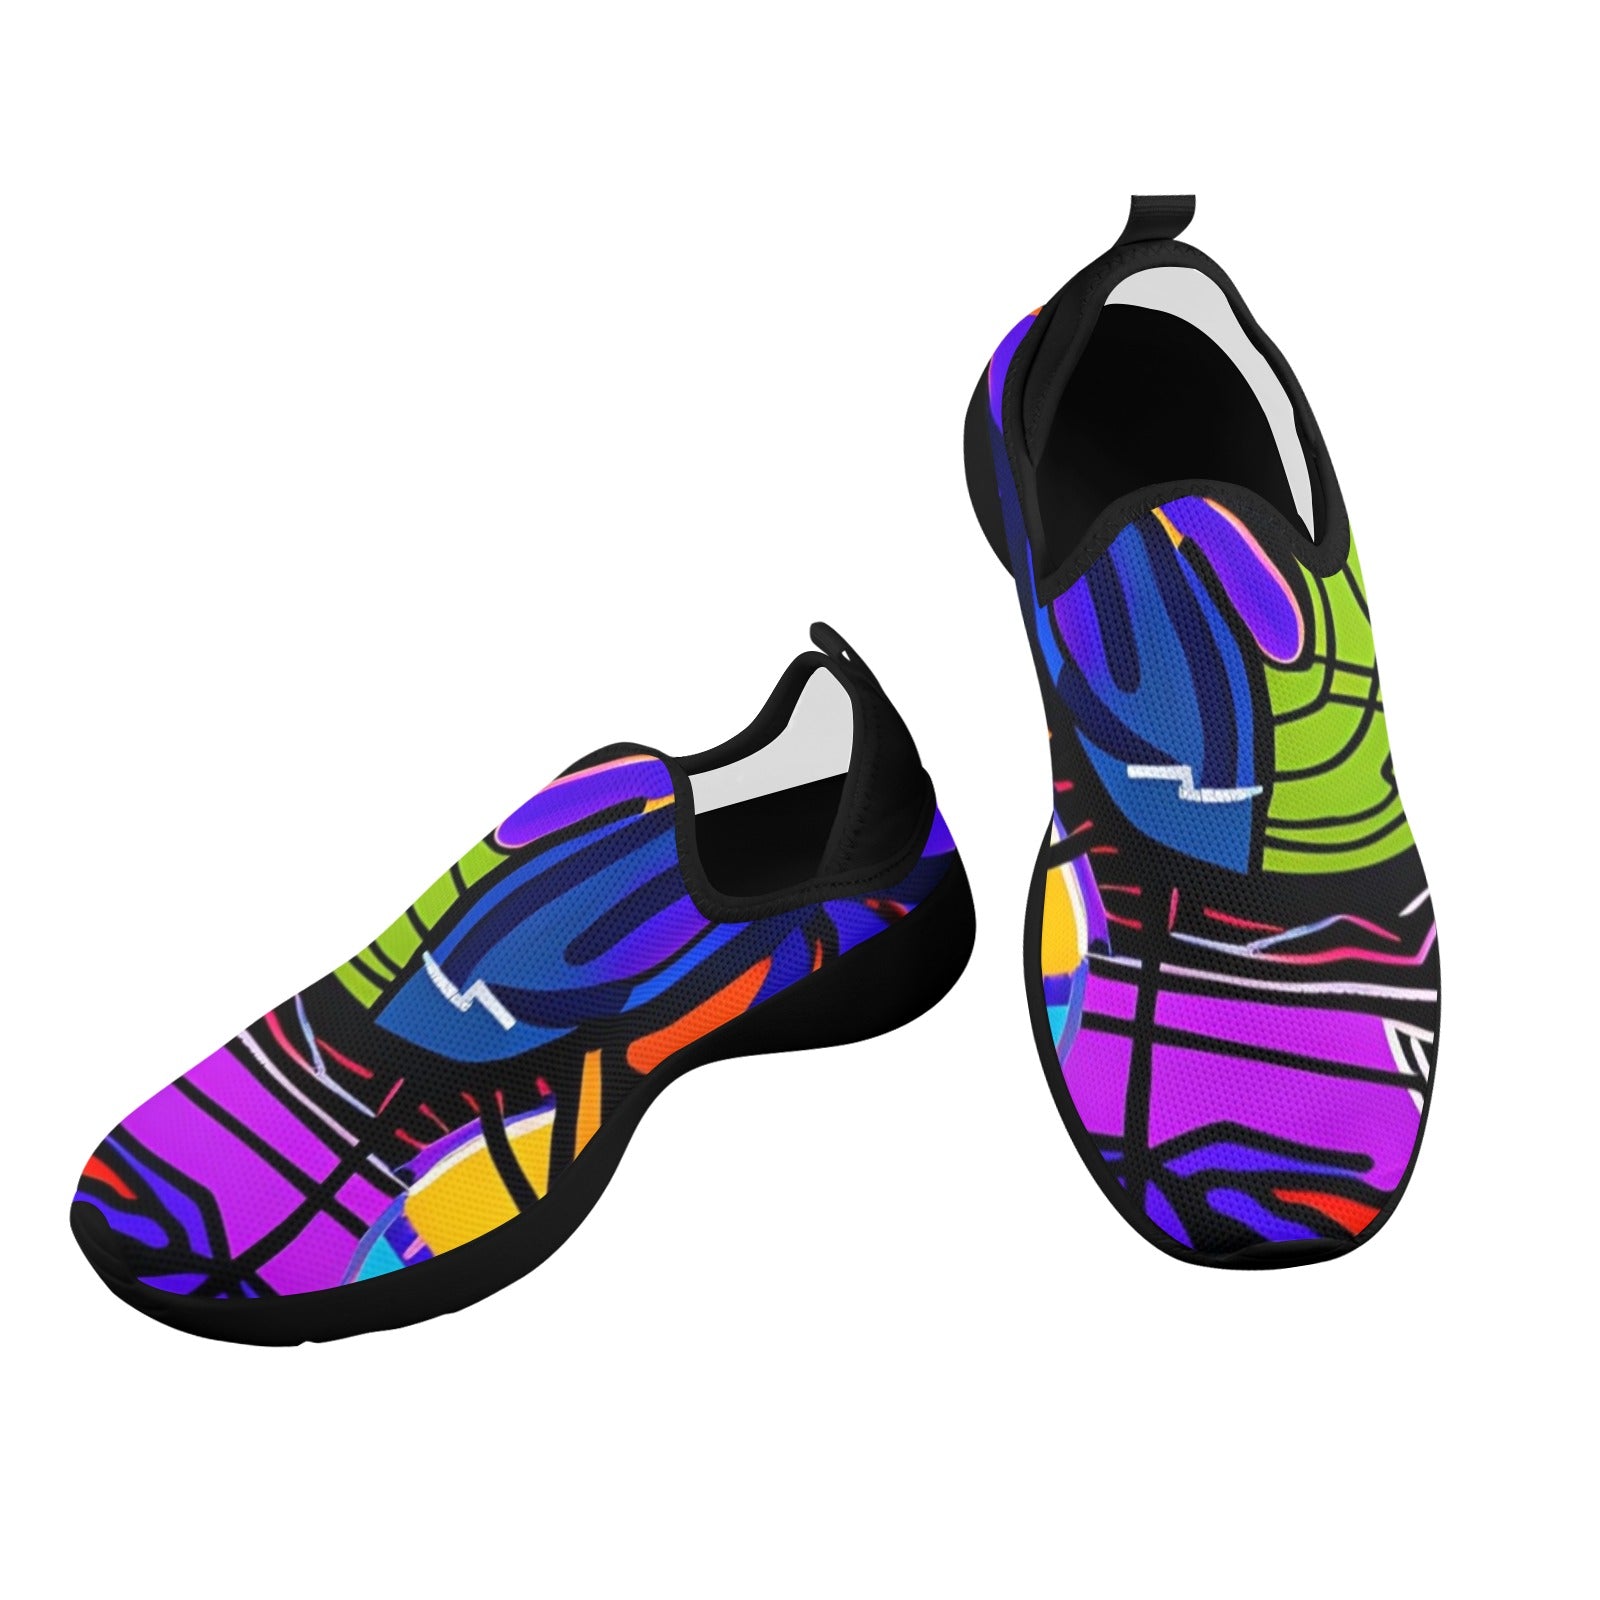 Purple Passion Sneakers - Fly Weave Drop-in Heel Sneakers for Women - Chris Thompkins